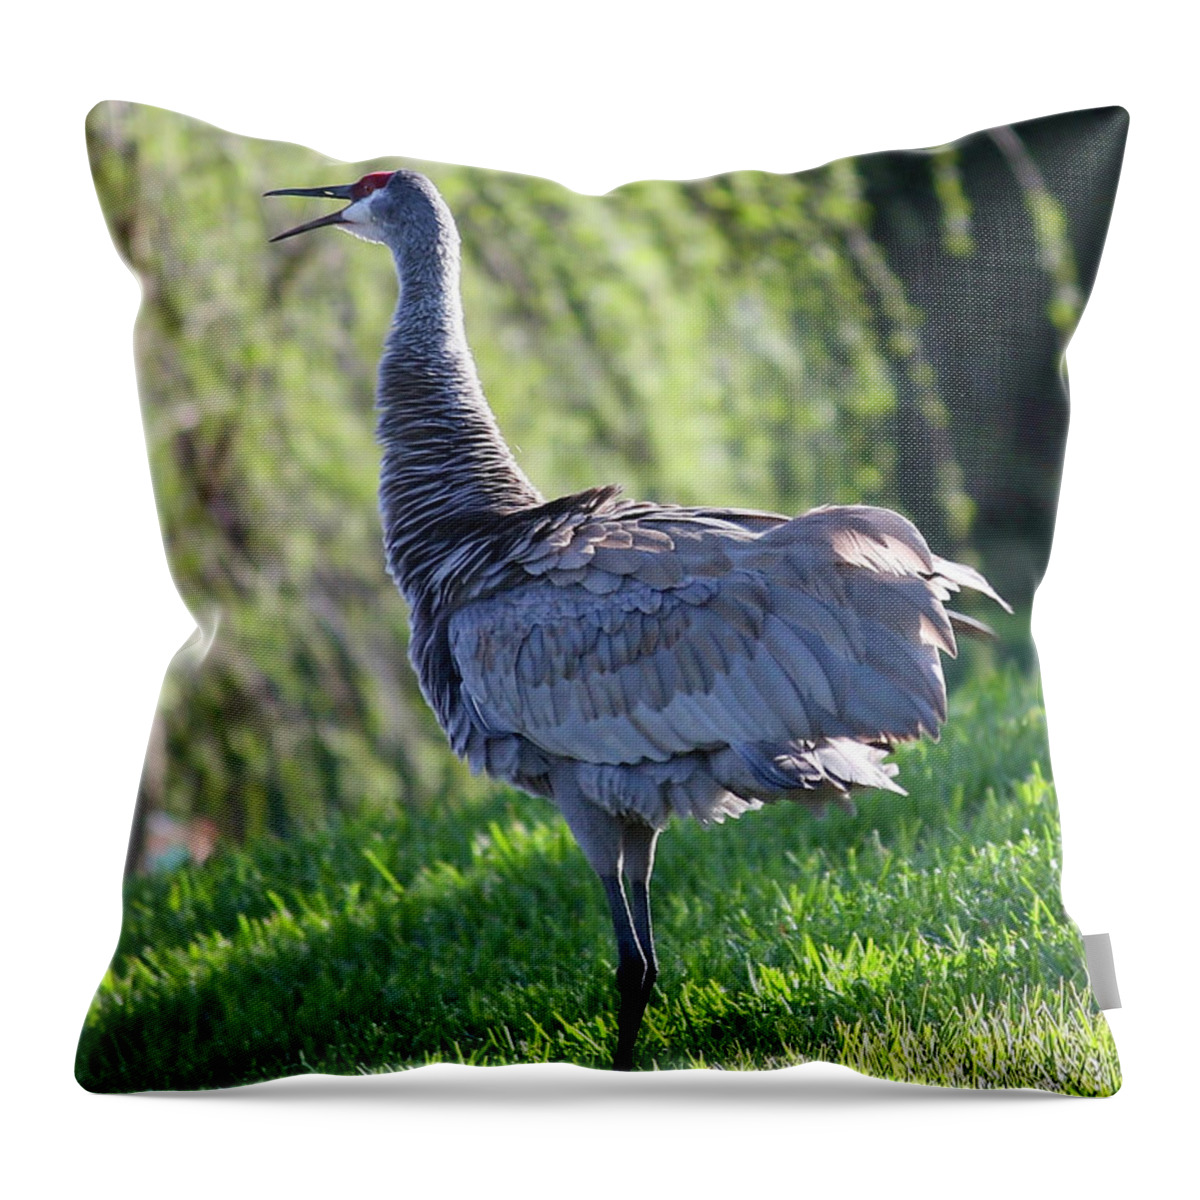 Sandhill Crane Throw Pillow featuring the photograph Noisy Sandhill Crane by Carol Groenen